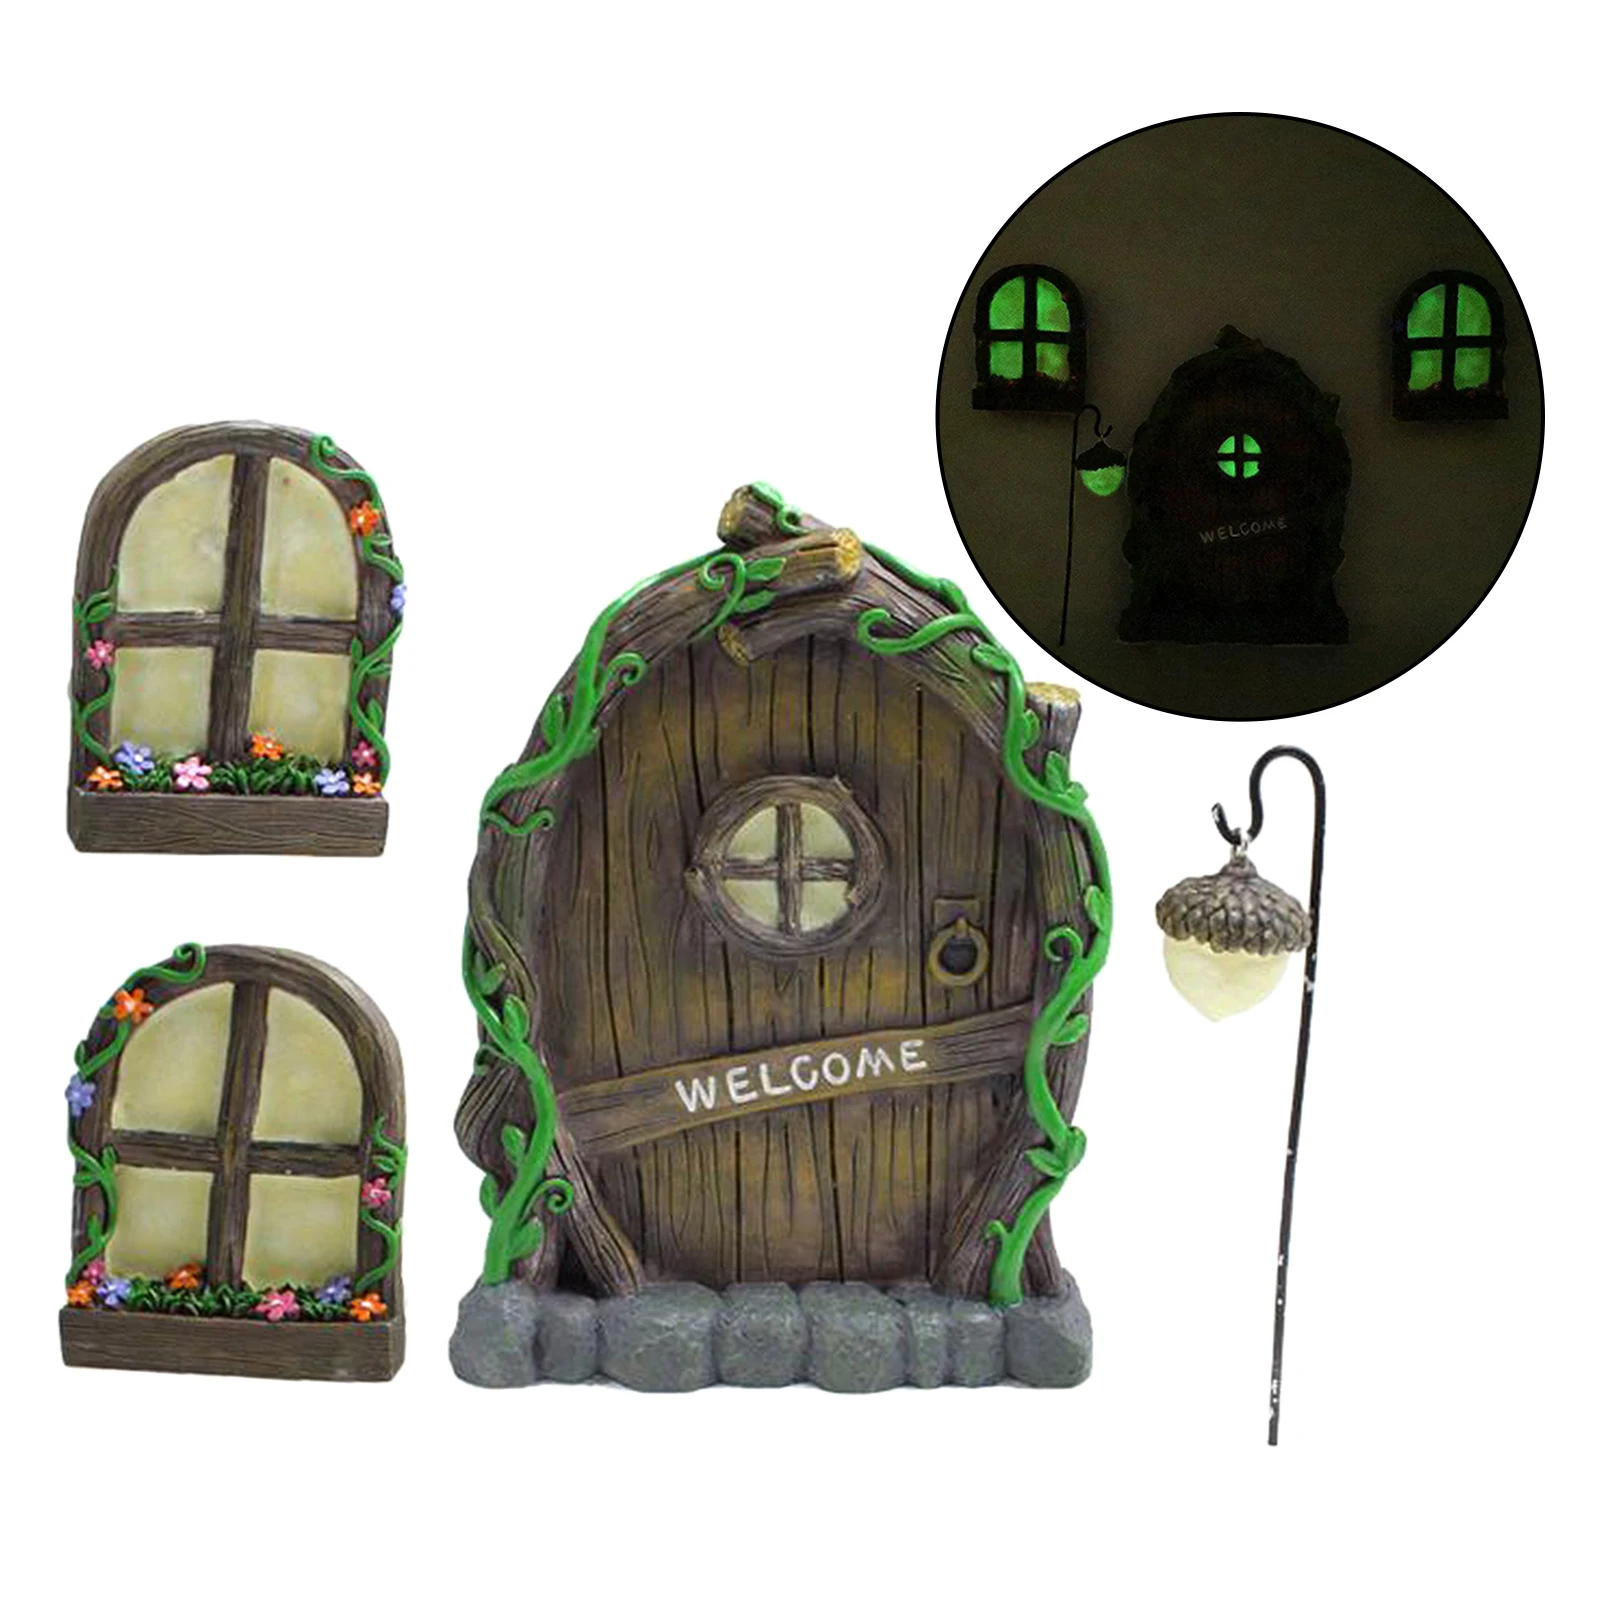 Cute Miniature Fairy Gnome Window and Door for Trees Yard Garden Decor Outdoor